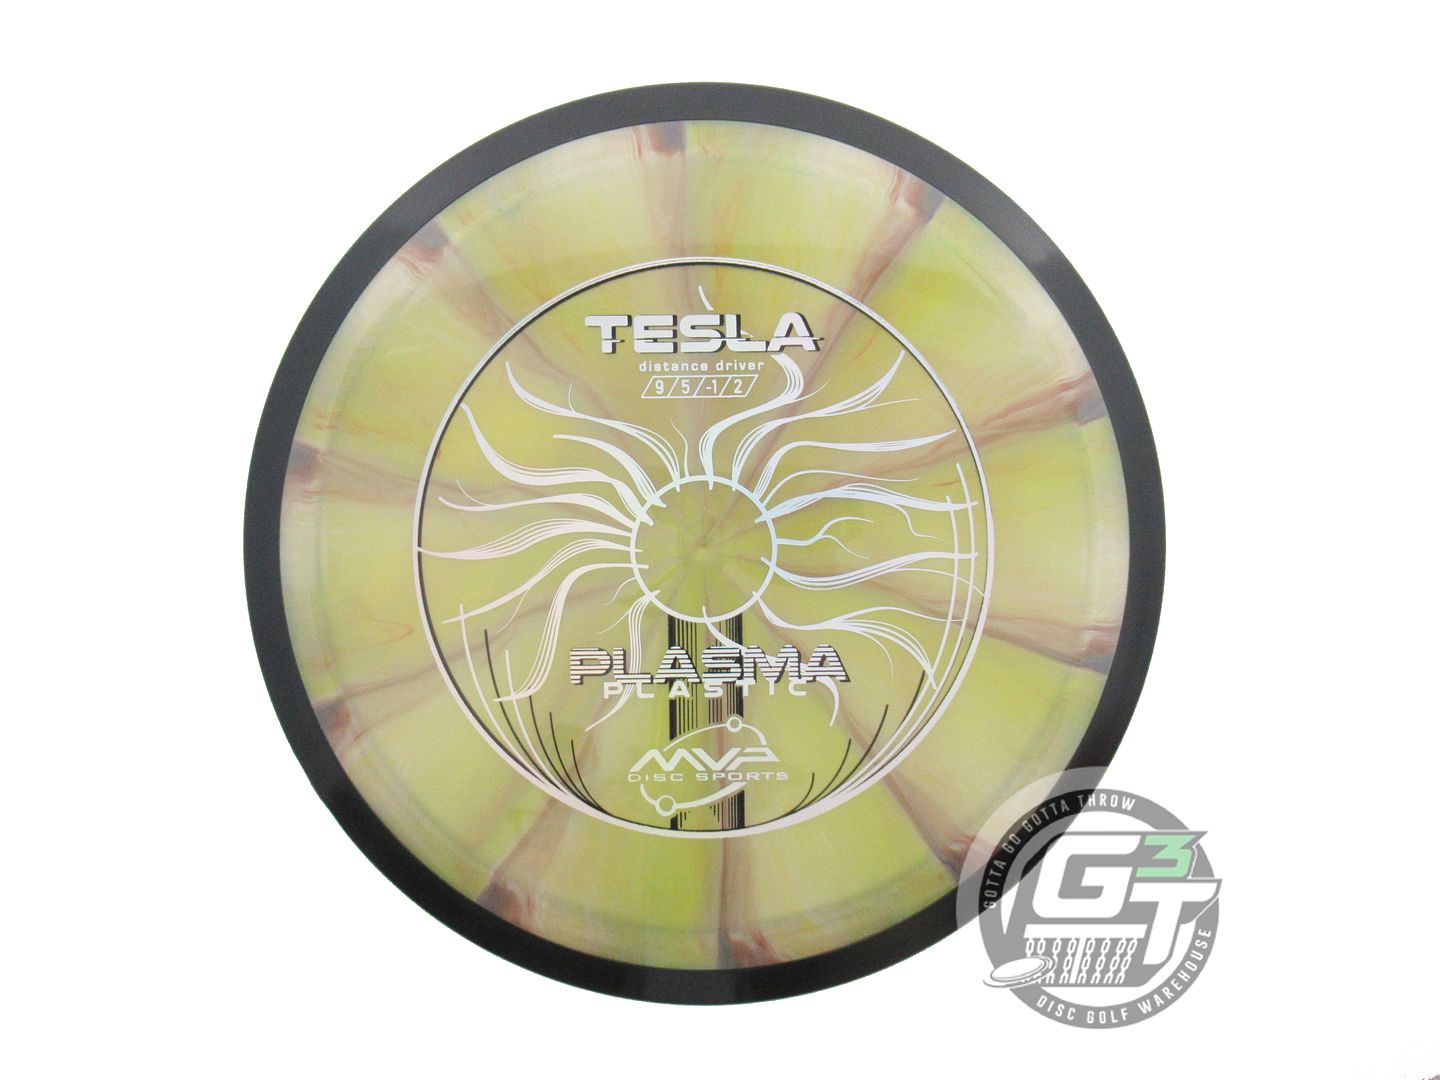 MVP Plasma Tesla Distance Driver Golf Disc (Individually Listed)